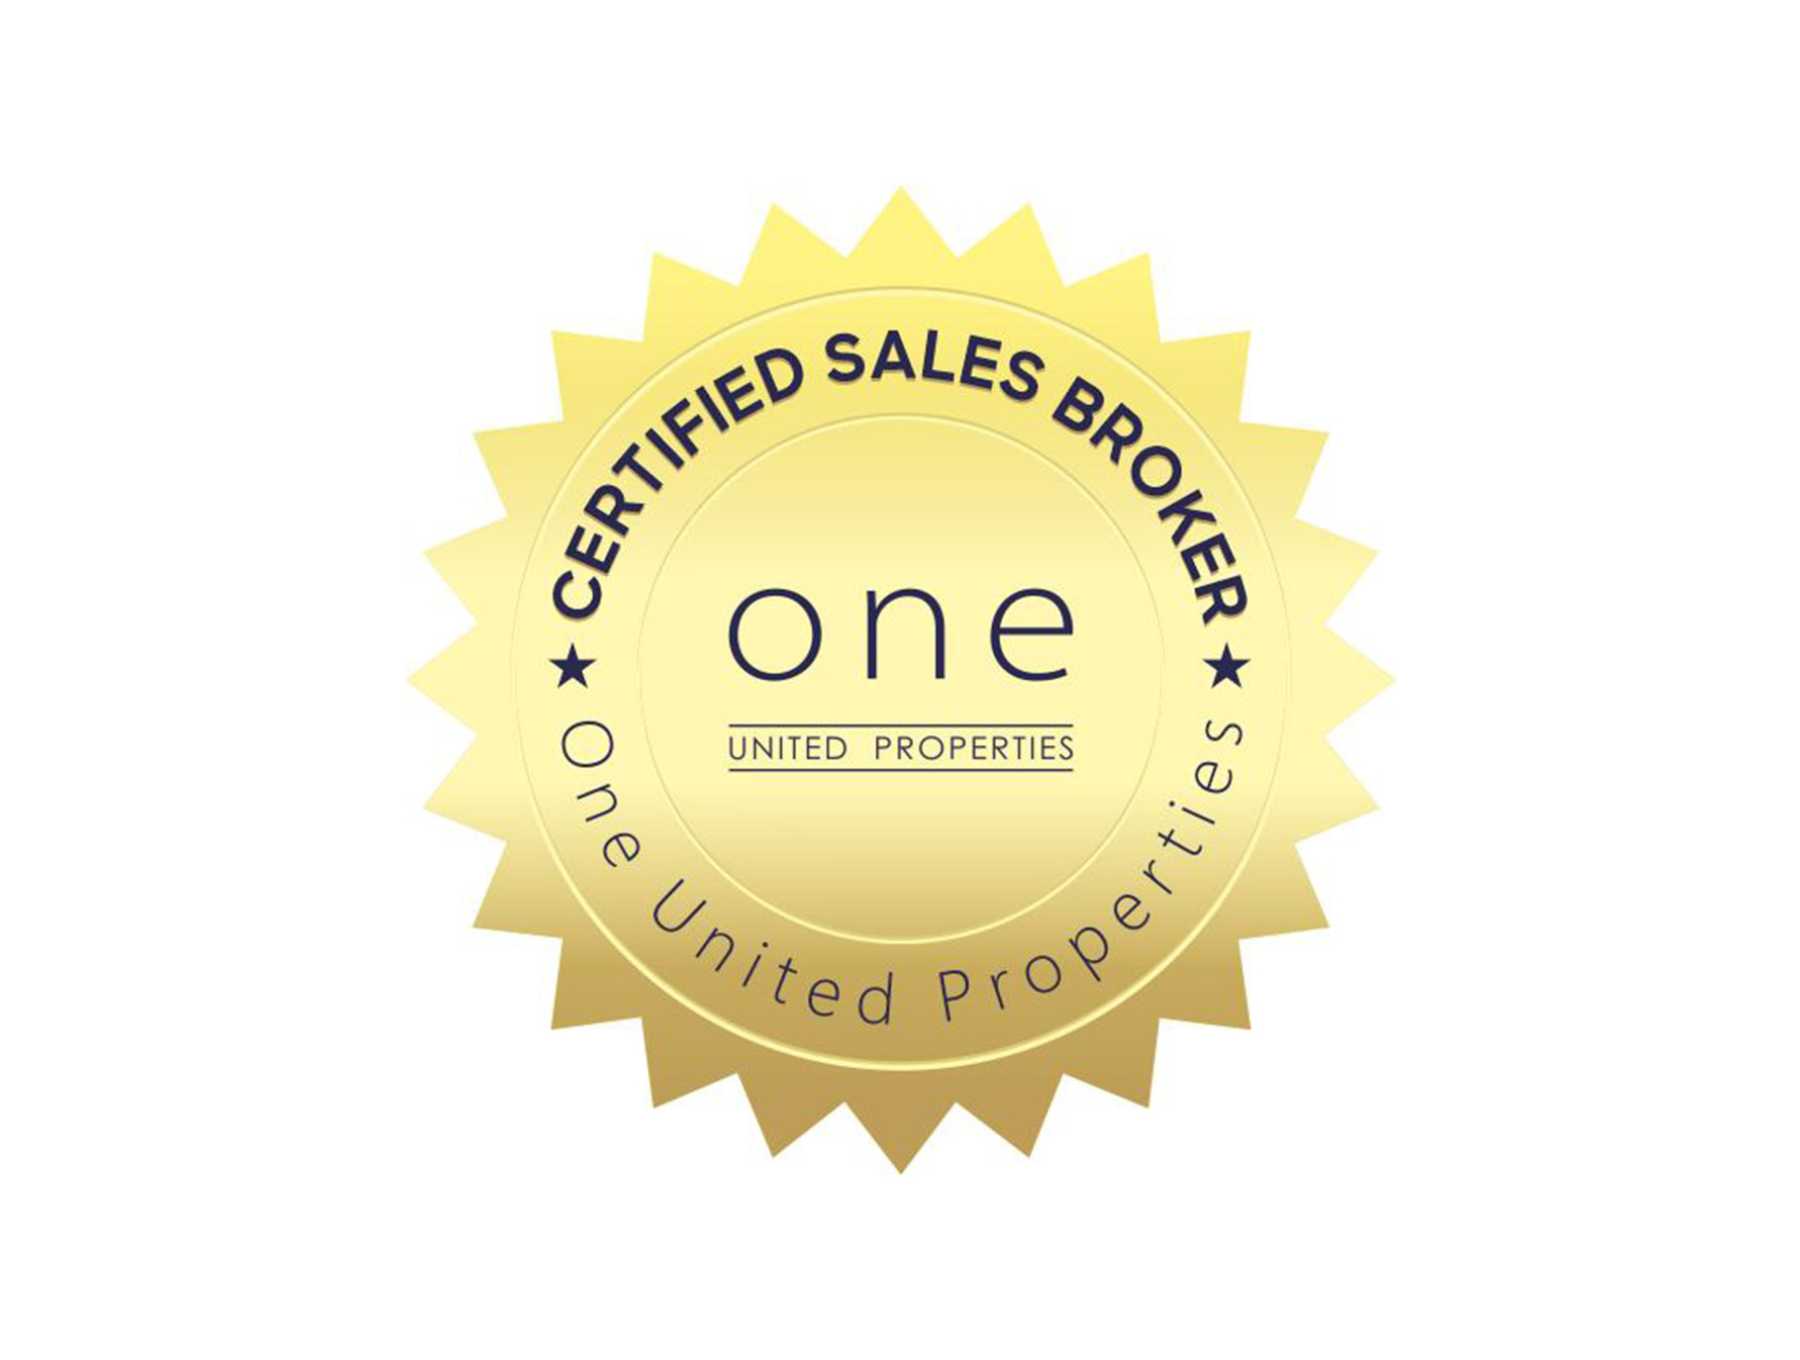 8 agenții imobiliare recunoscute de One United Properties drept Certified Sales Brokers